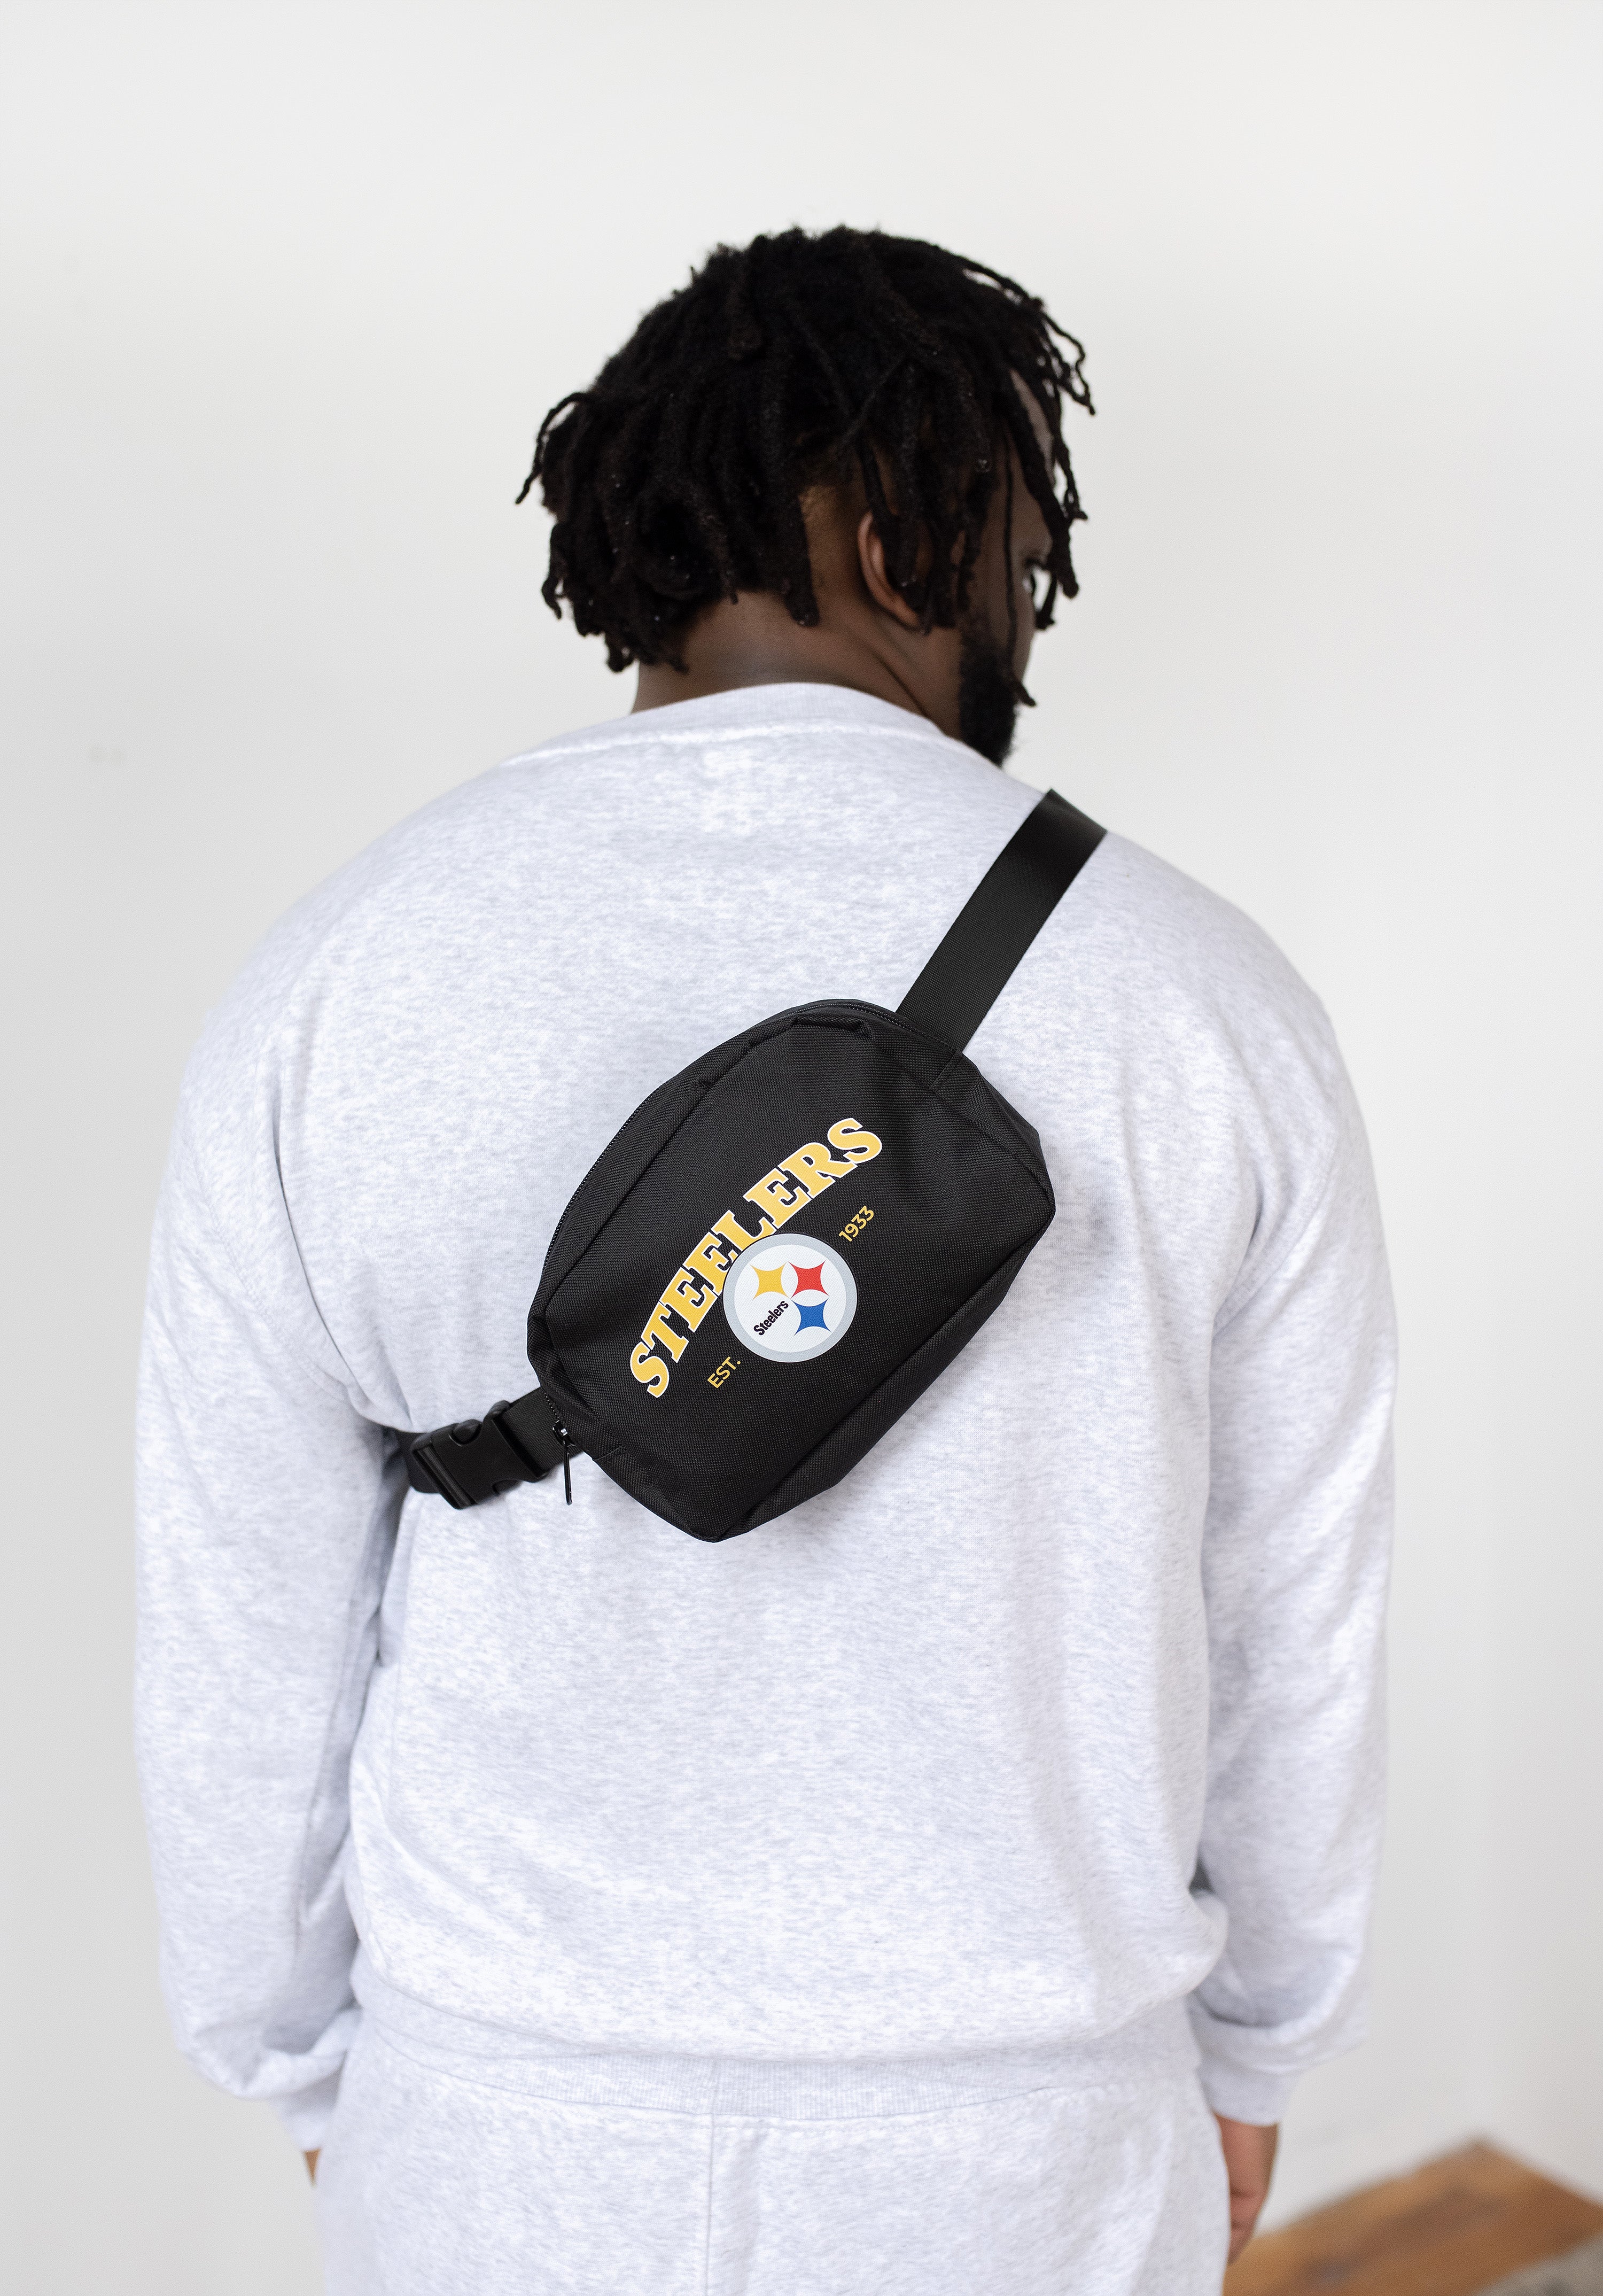 NFL Pittsburgh Steelers Belt Bag